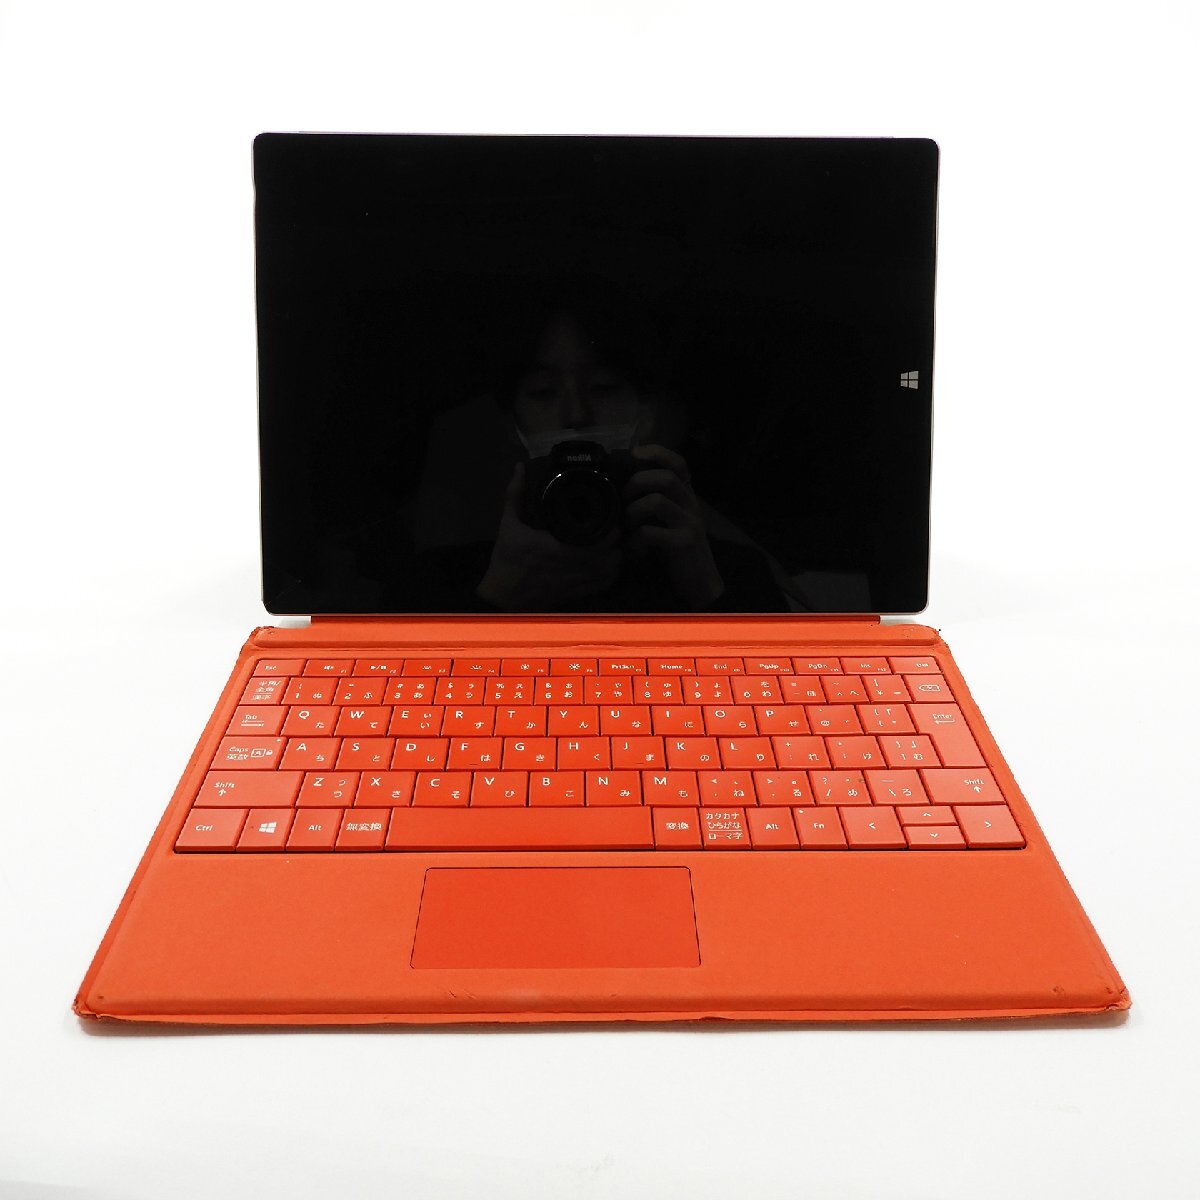 Microsoft Surface 3 128GB 1657 Atom x7-Z8700 1.6GHz 4GB 10.8インチ キーボードカバー付き ジャンク品 #18080 タブレットの画像4